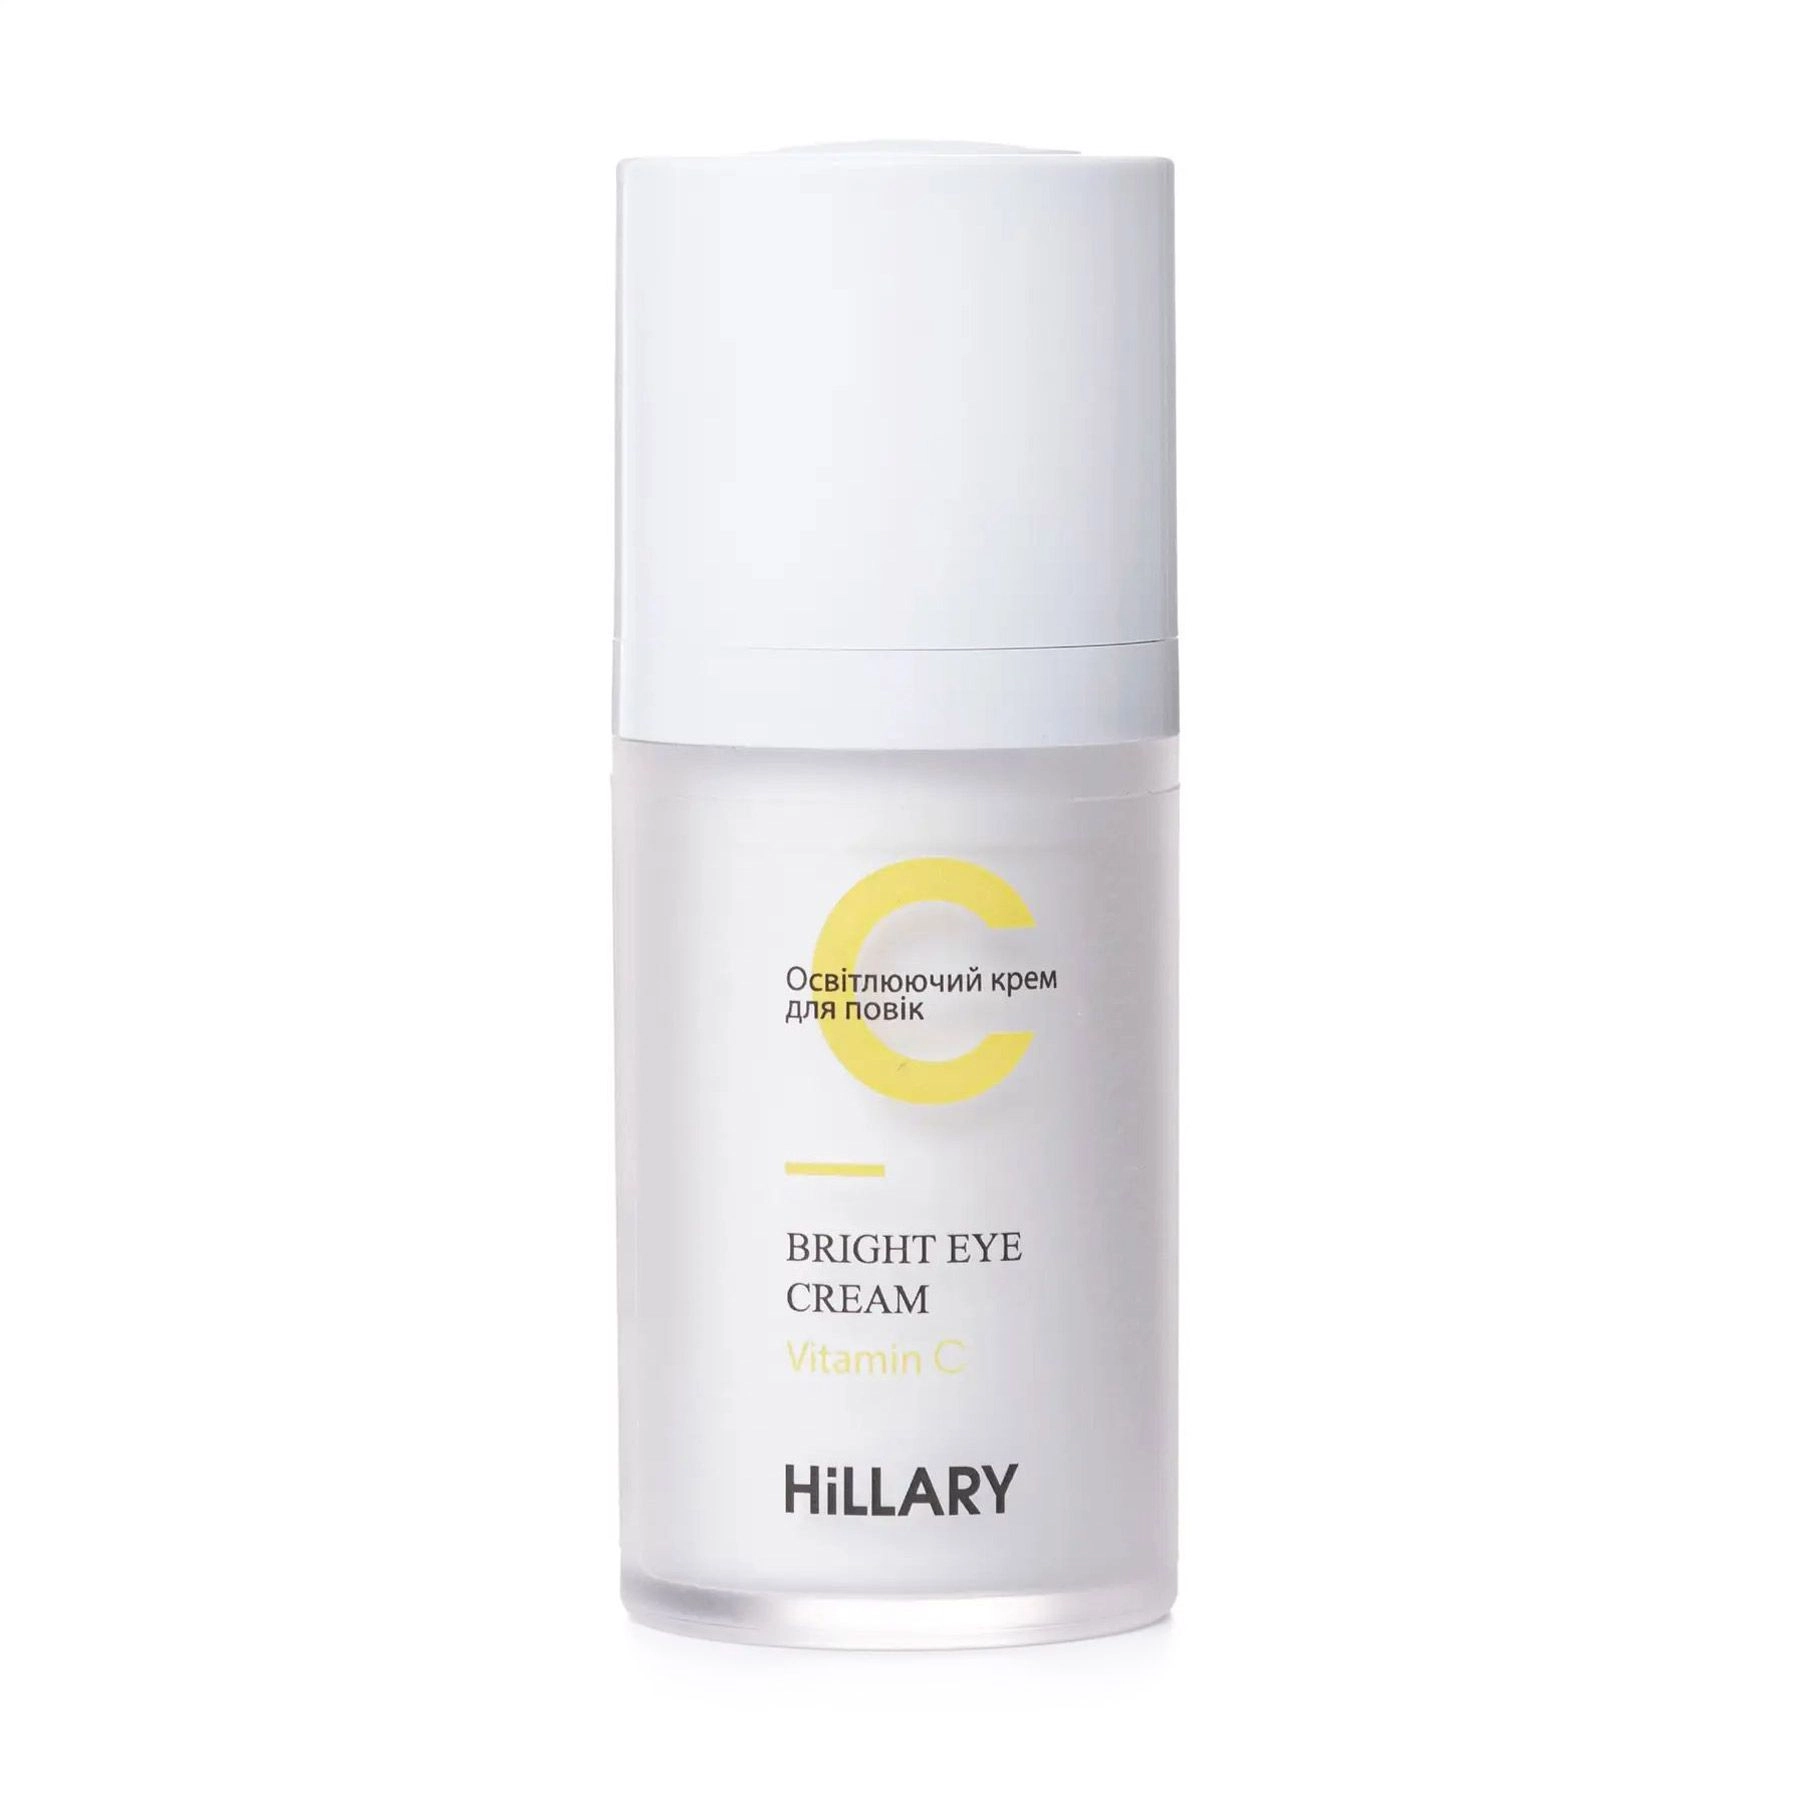 Осветляющий крем для век с витамином C - Hillary Vitamin C Bright Eye Crea, 15 мл - фото N3